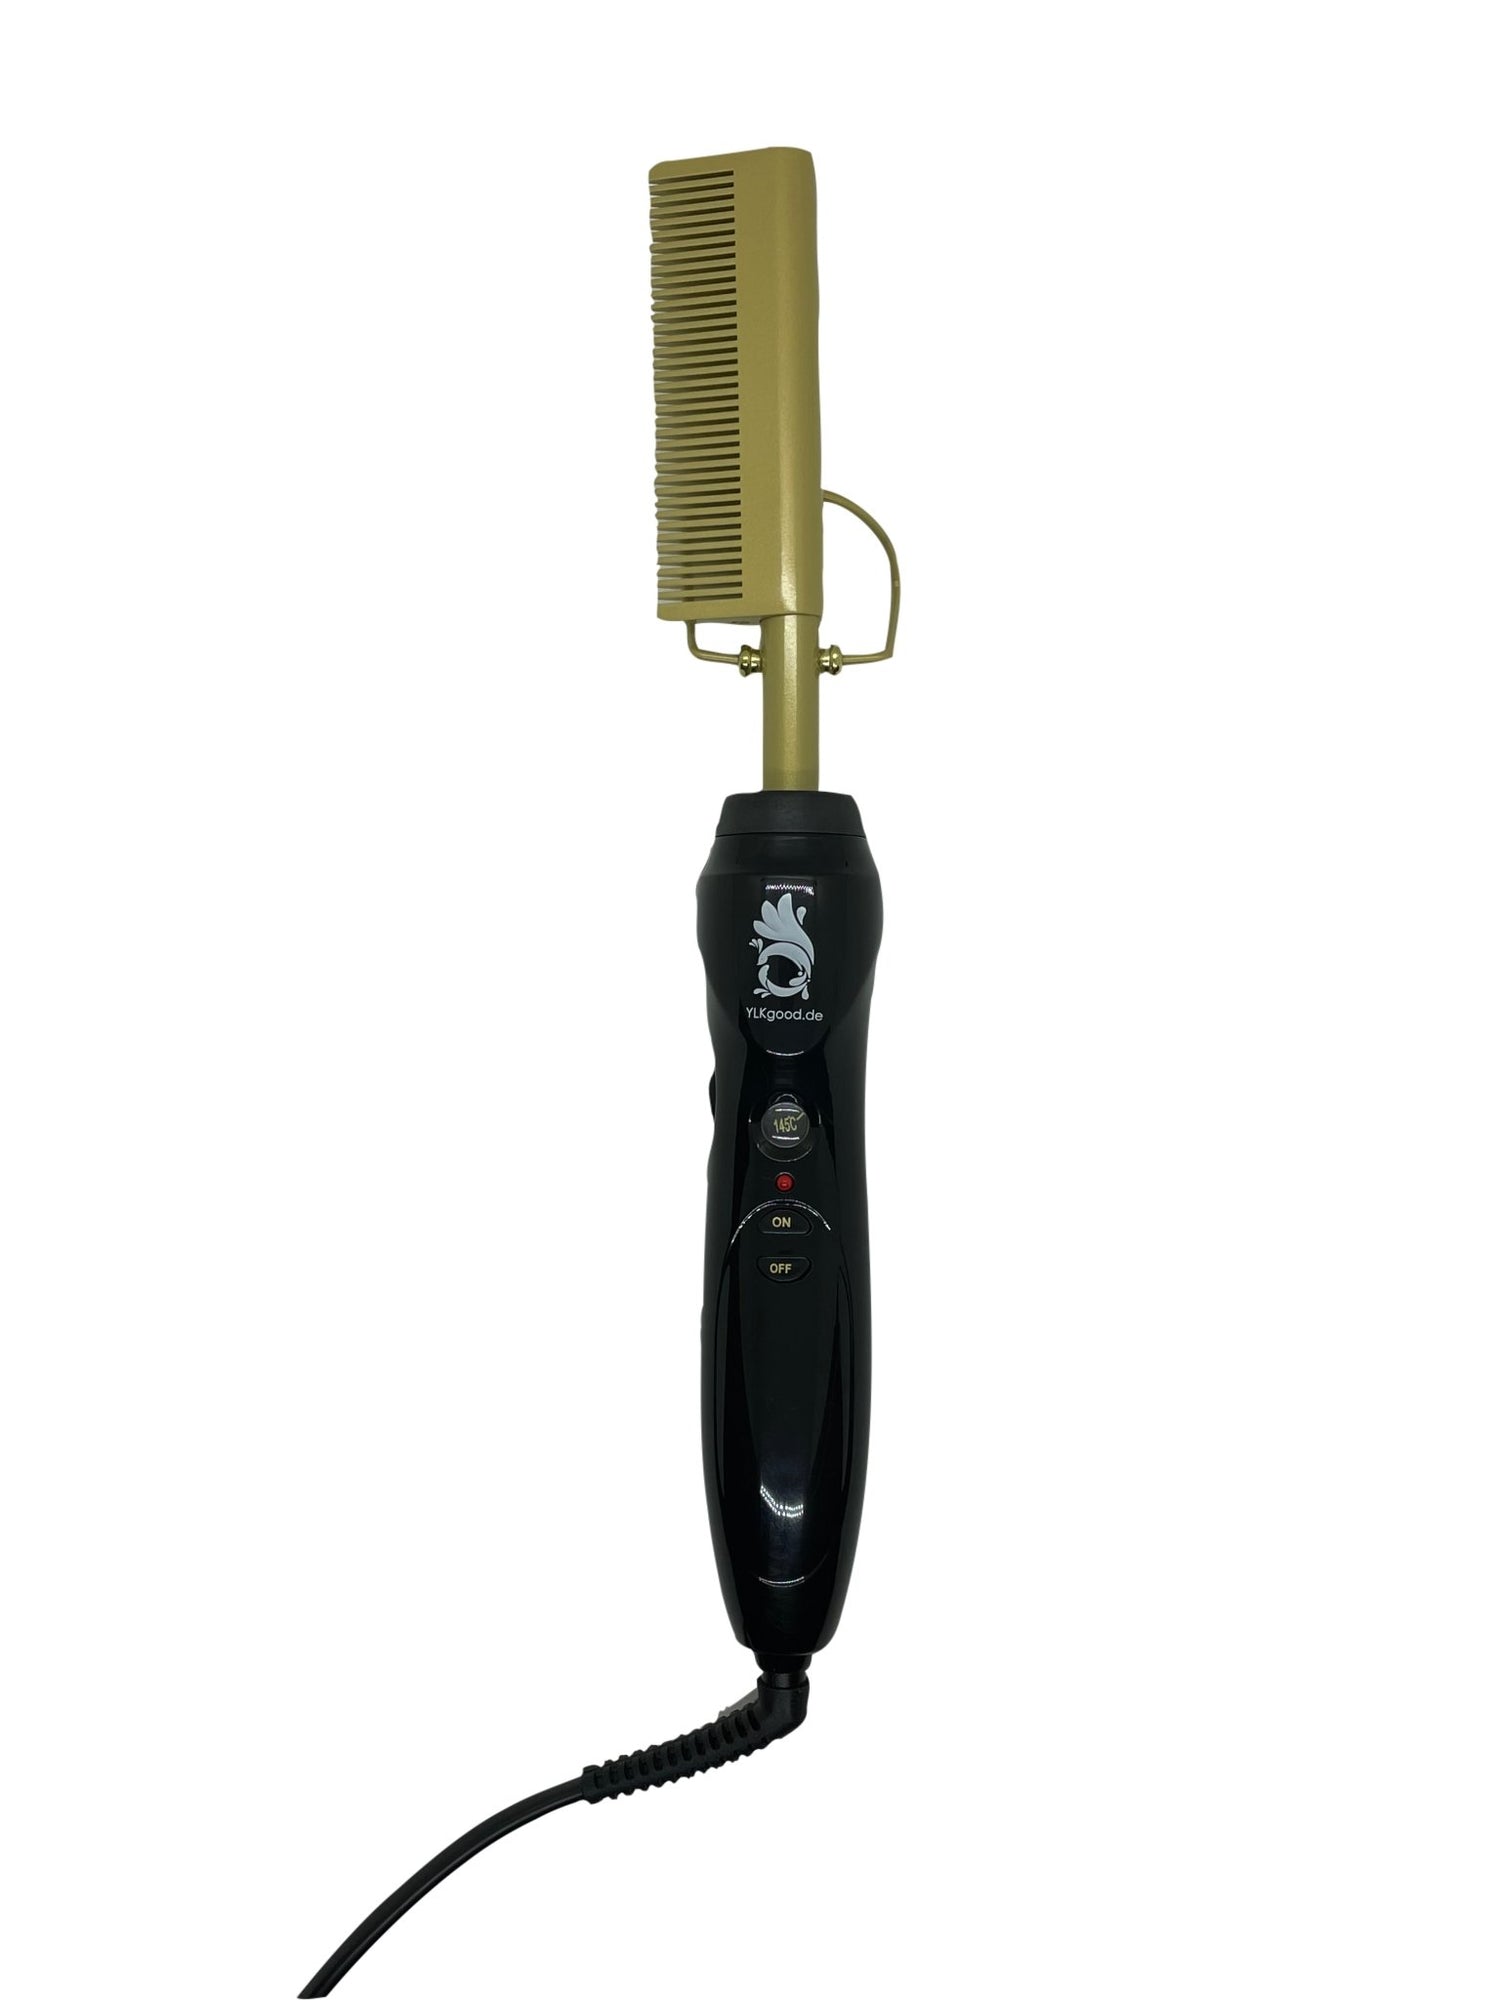 Hot Comb Electric Straightening Comb - Haarglättungskamm mit